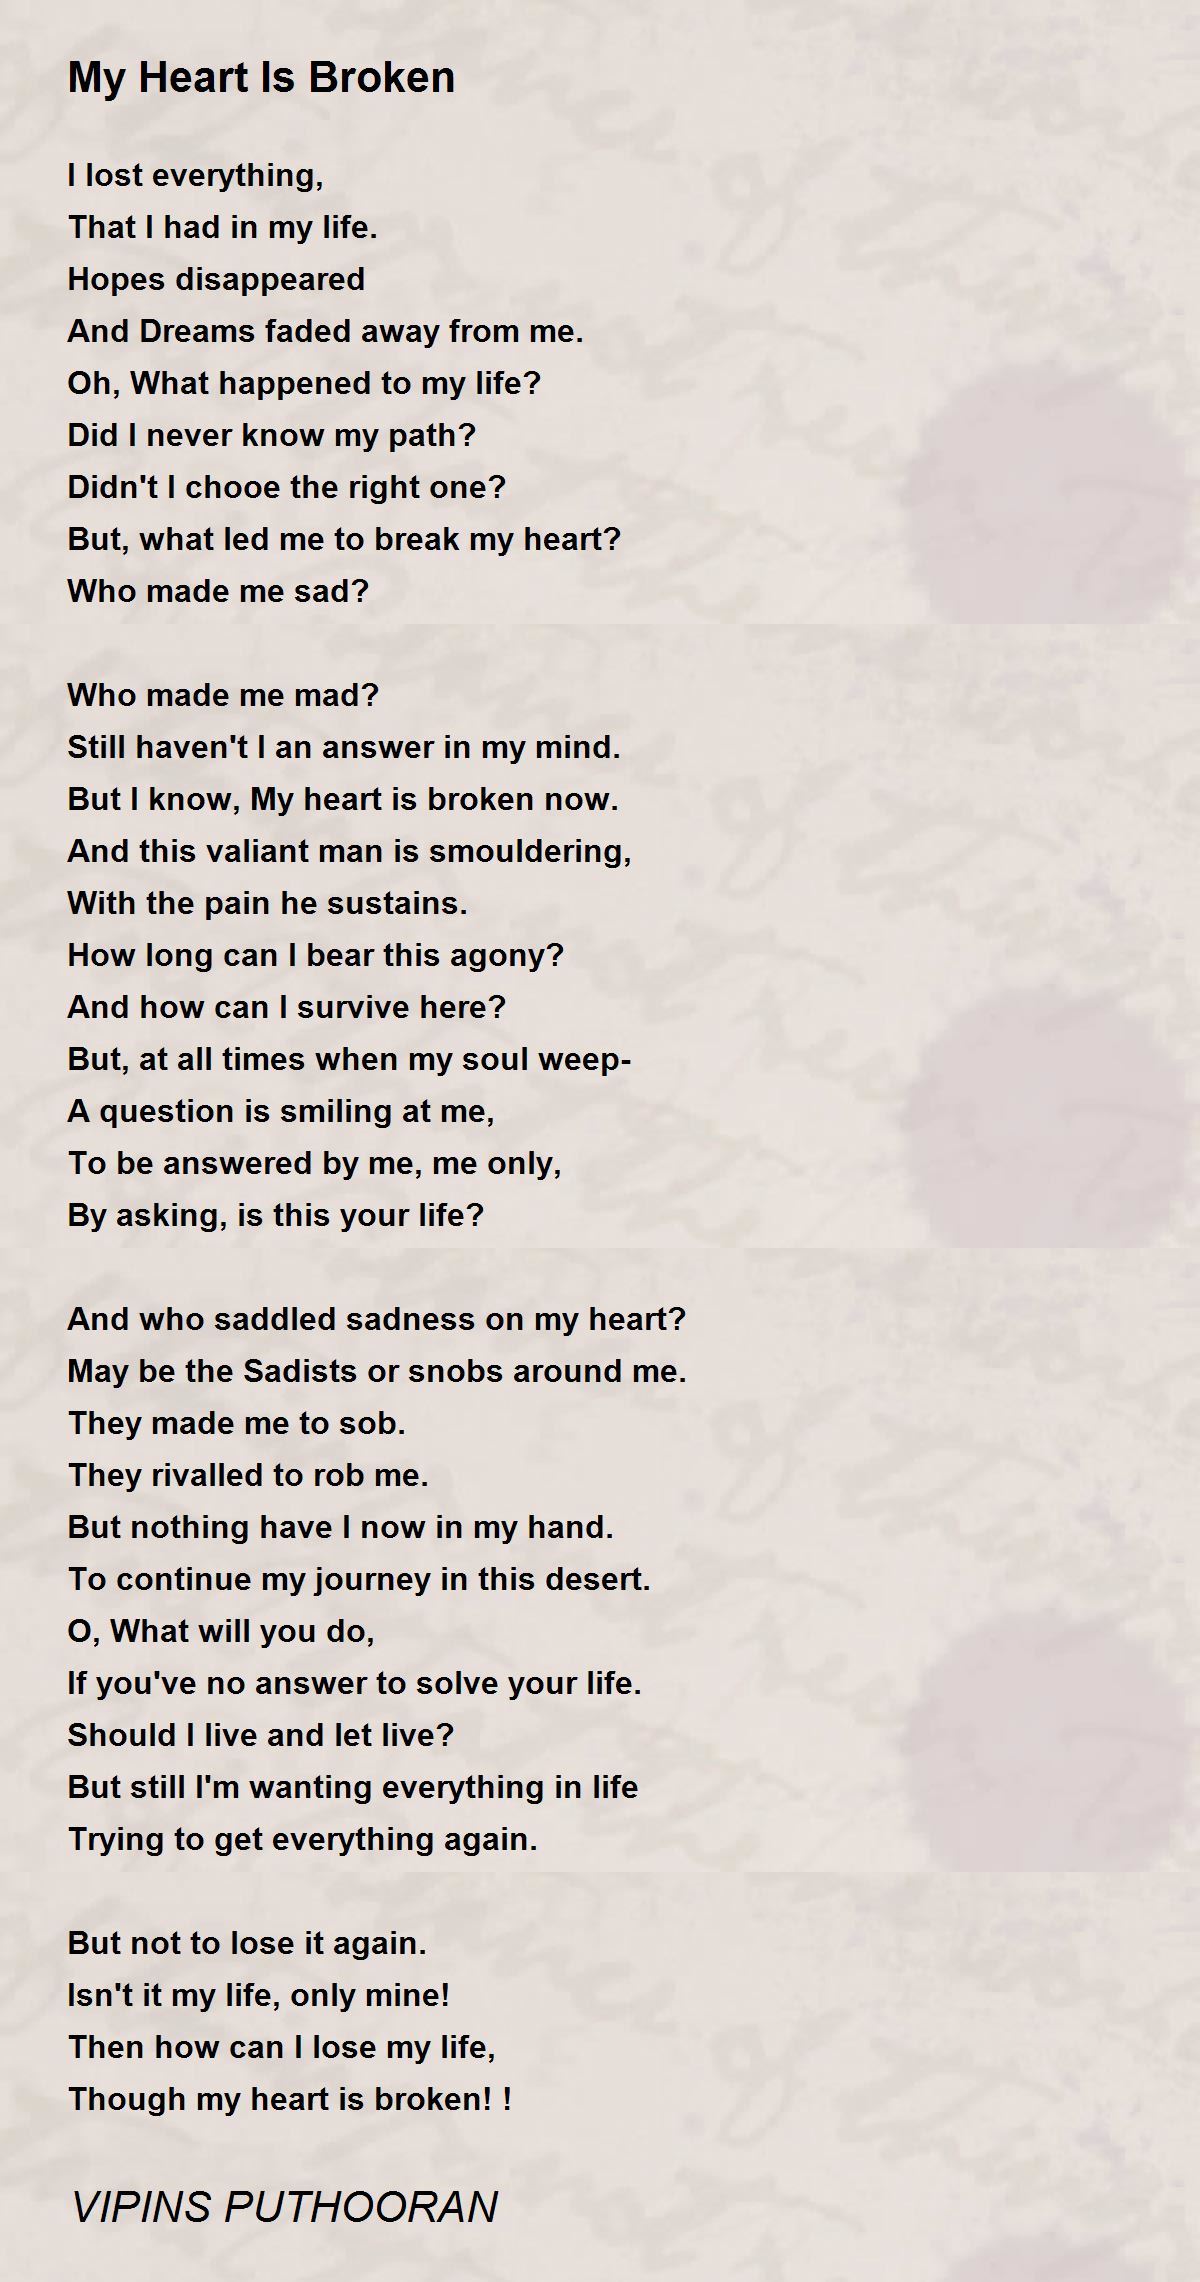 My Heart Broken - My Heart Is Poem by VIPINS PUTHOORAN